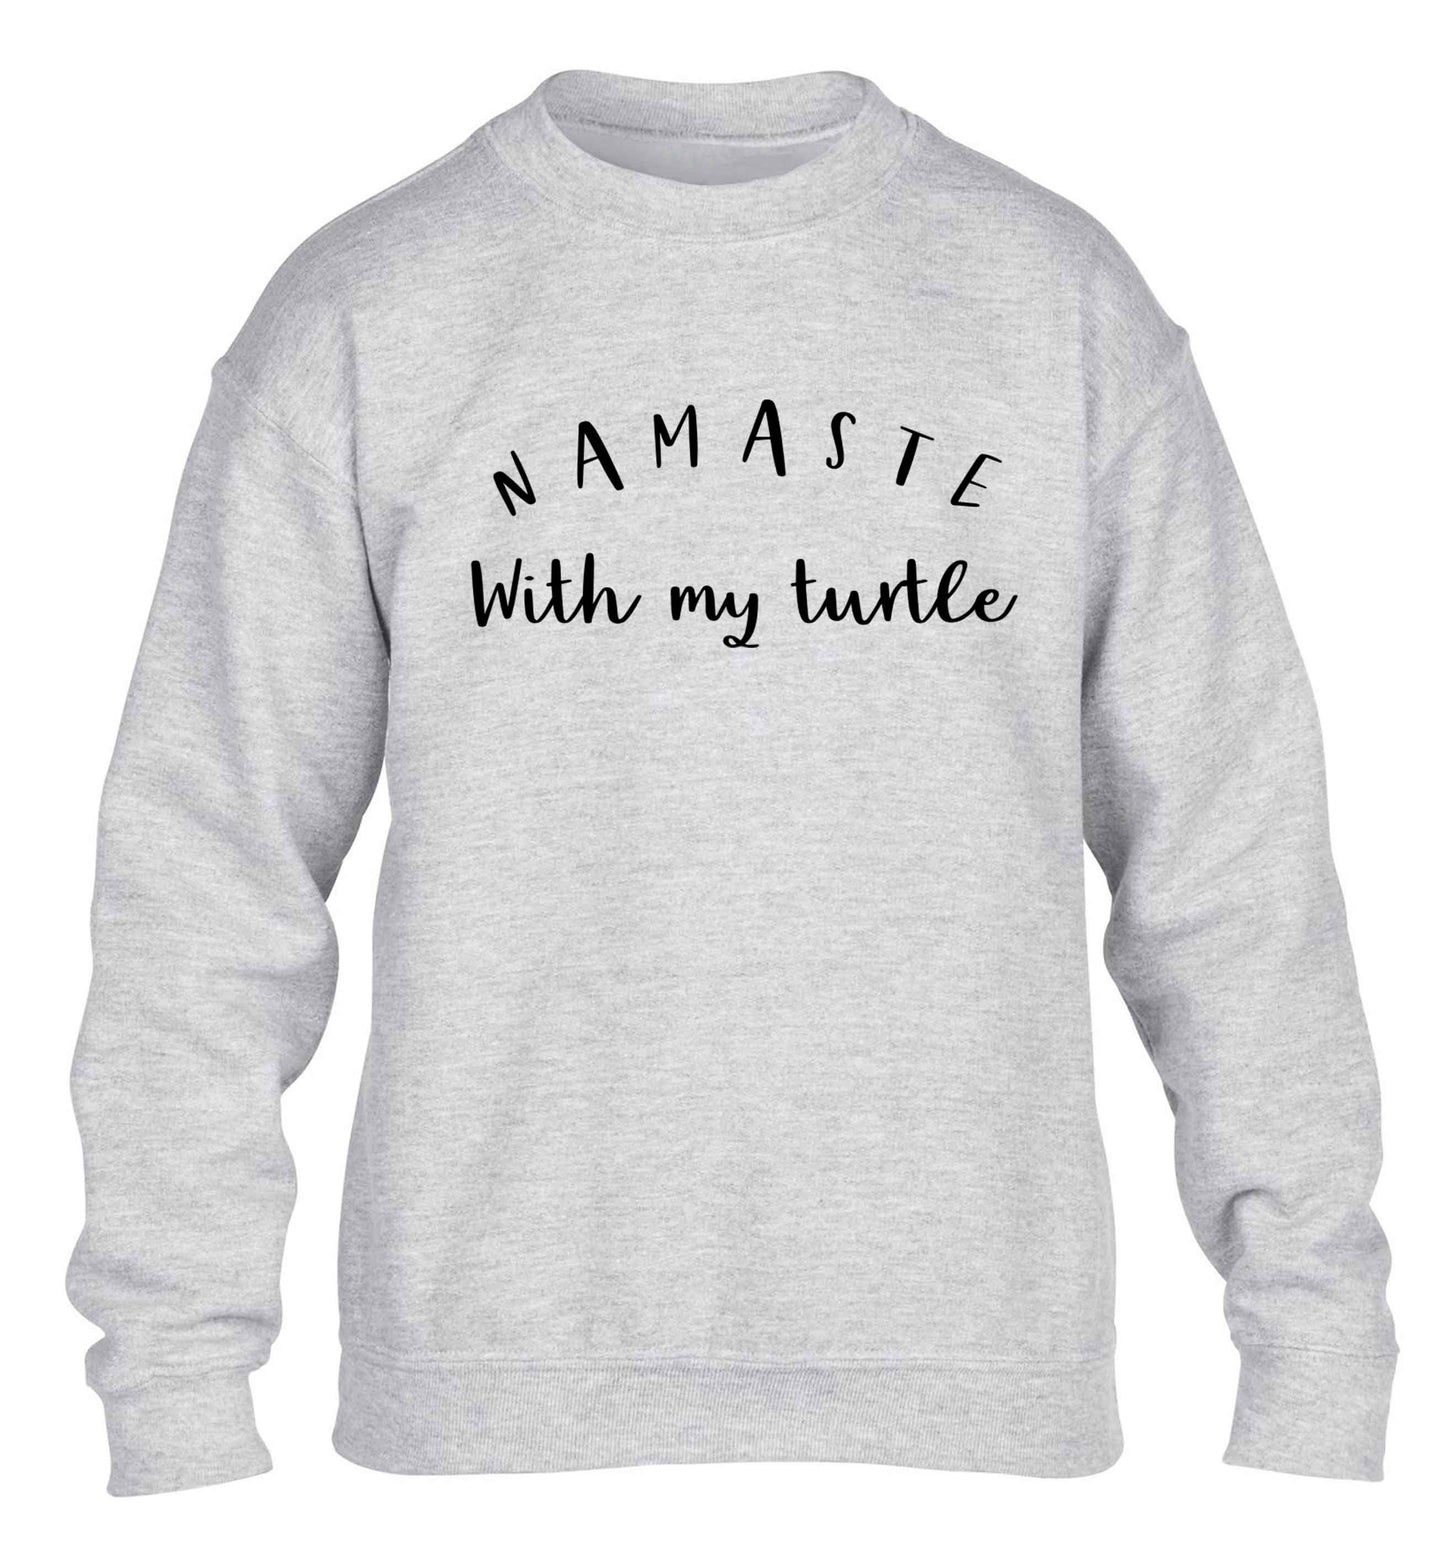 Namaste with my turtle children's grey sweater 12-13 Years